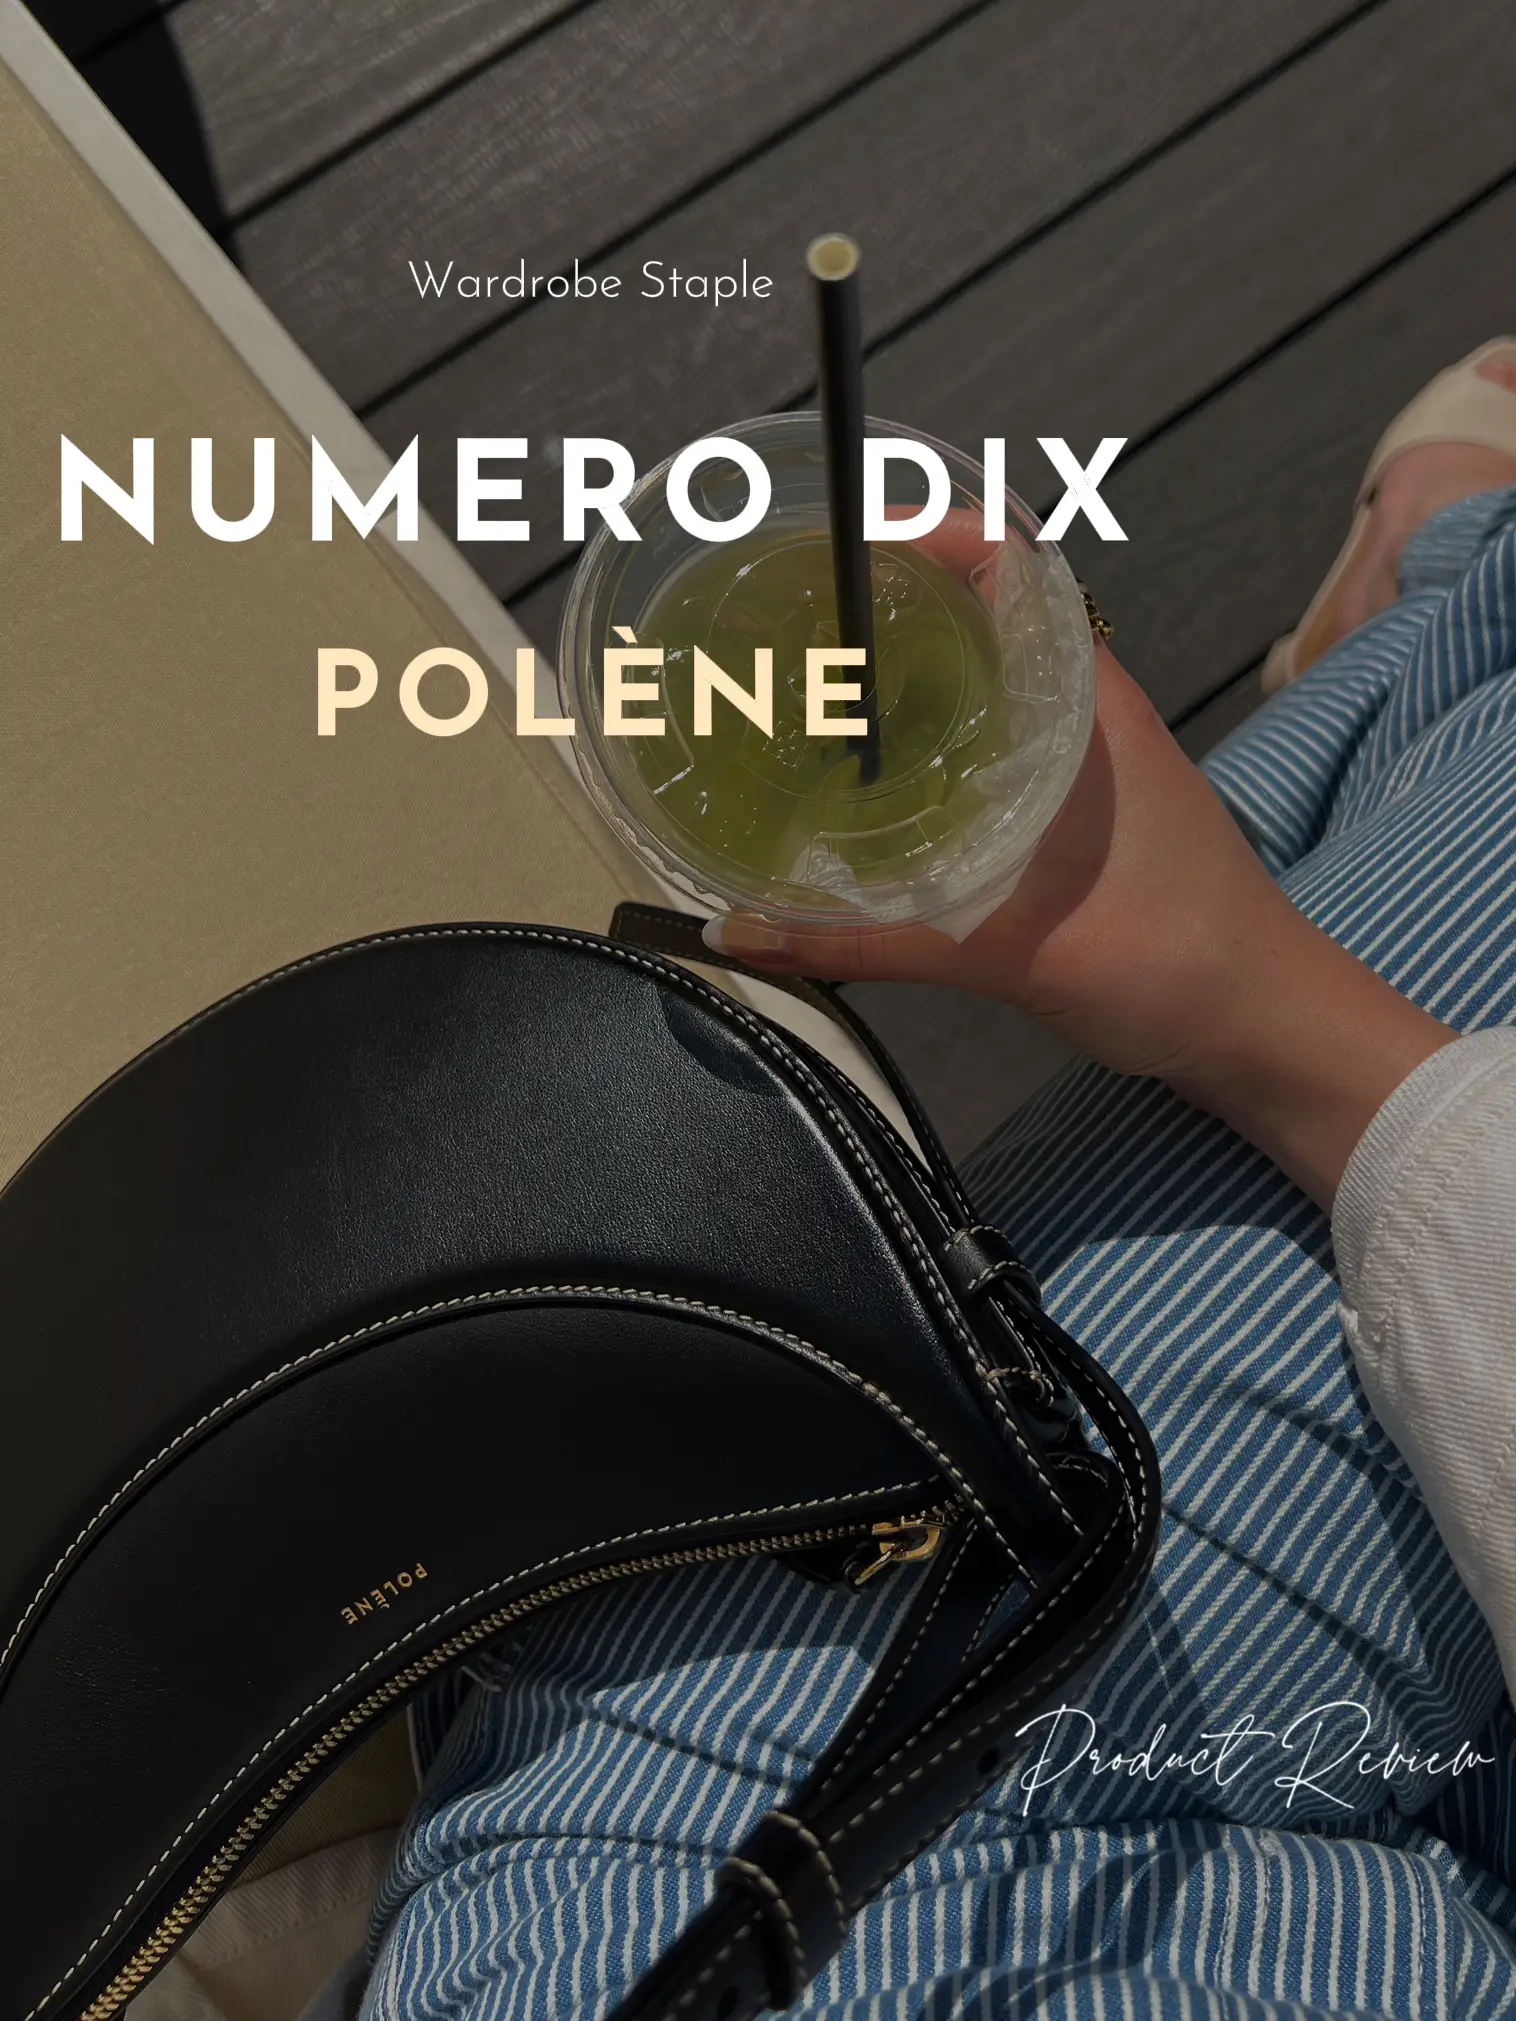 My honest review of the Polene Paris Numero Un Bag ~ Roses and